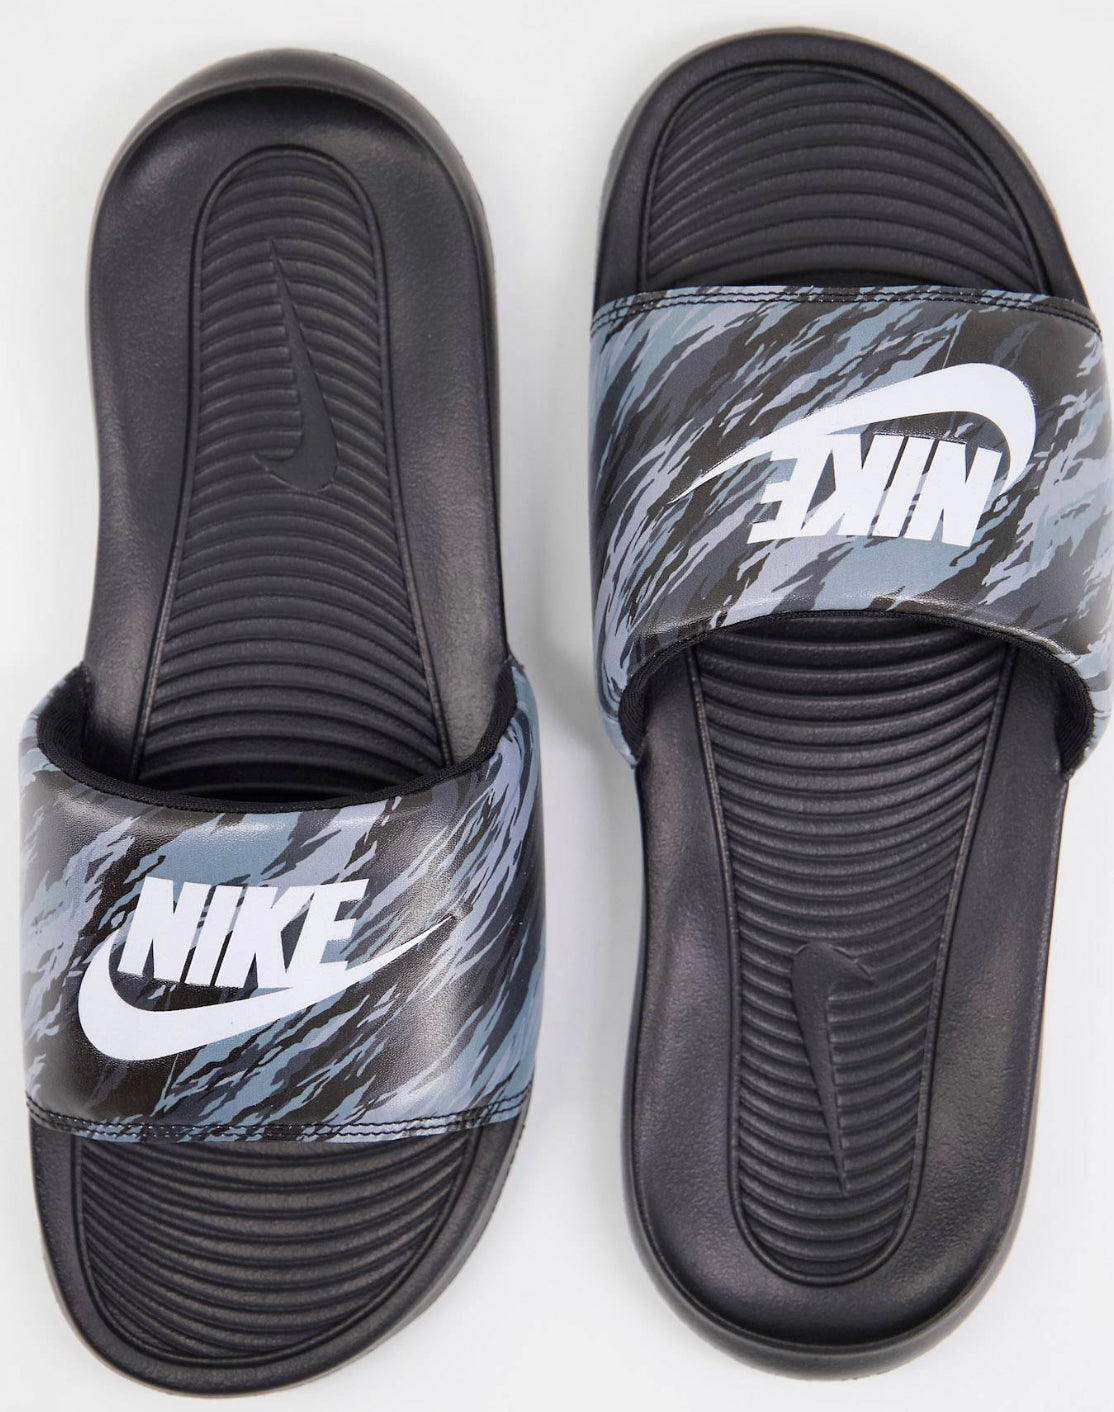 Nike Slide “Marble”